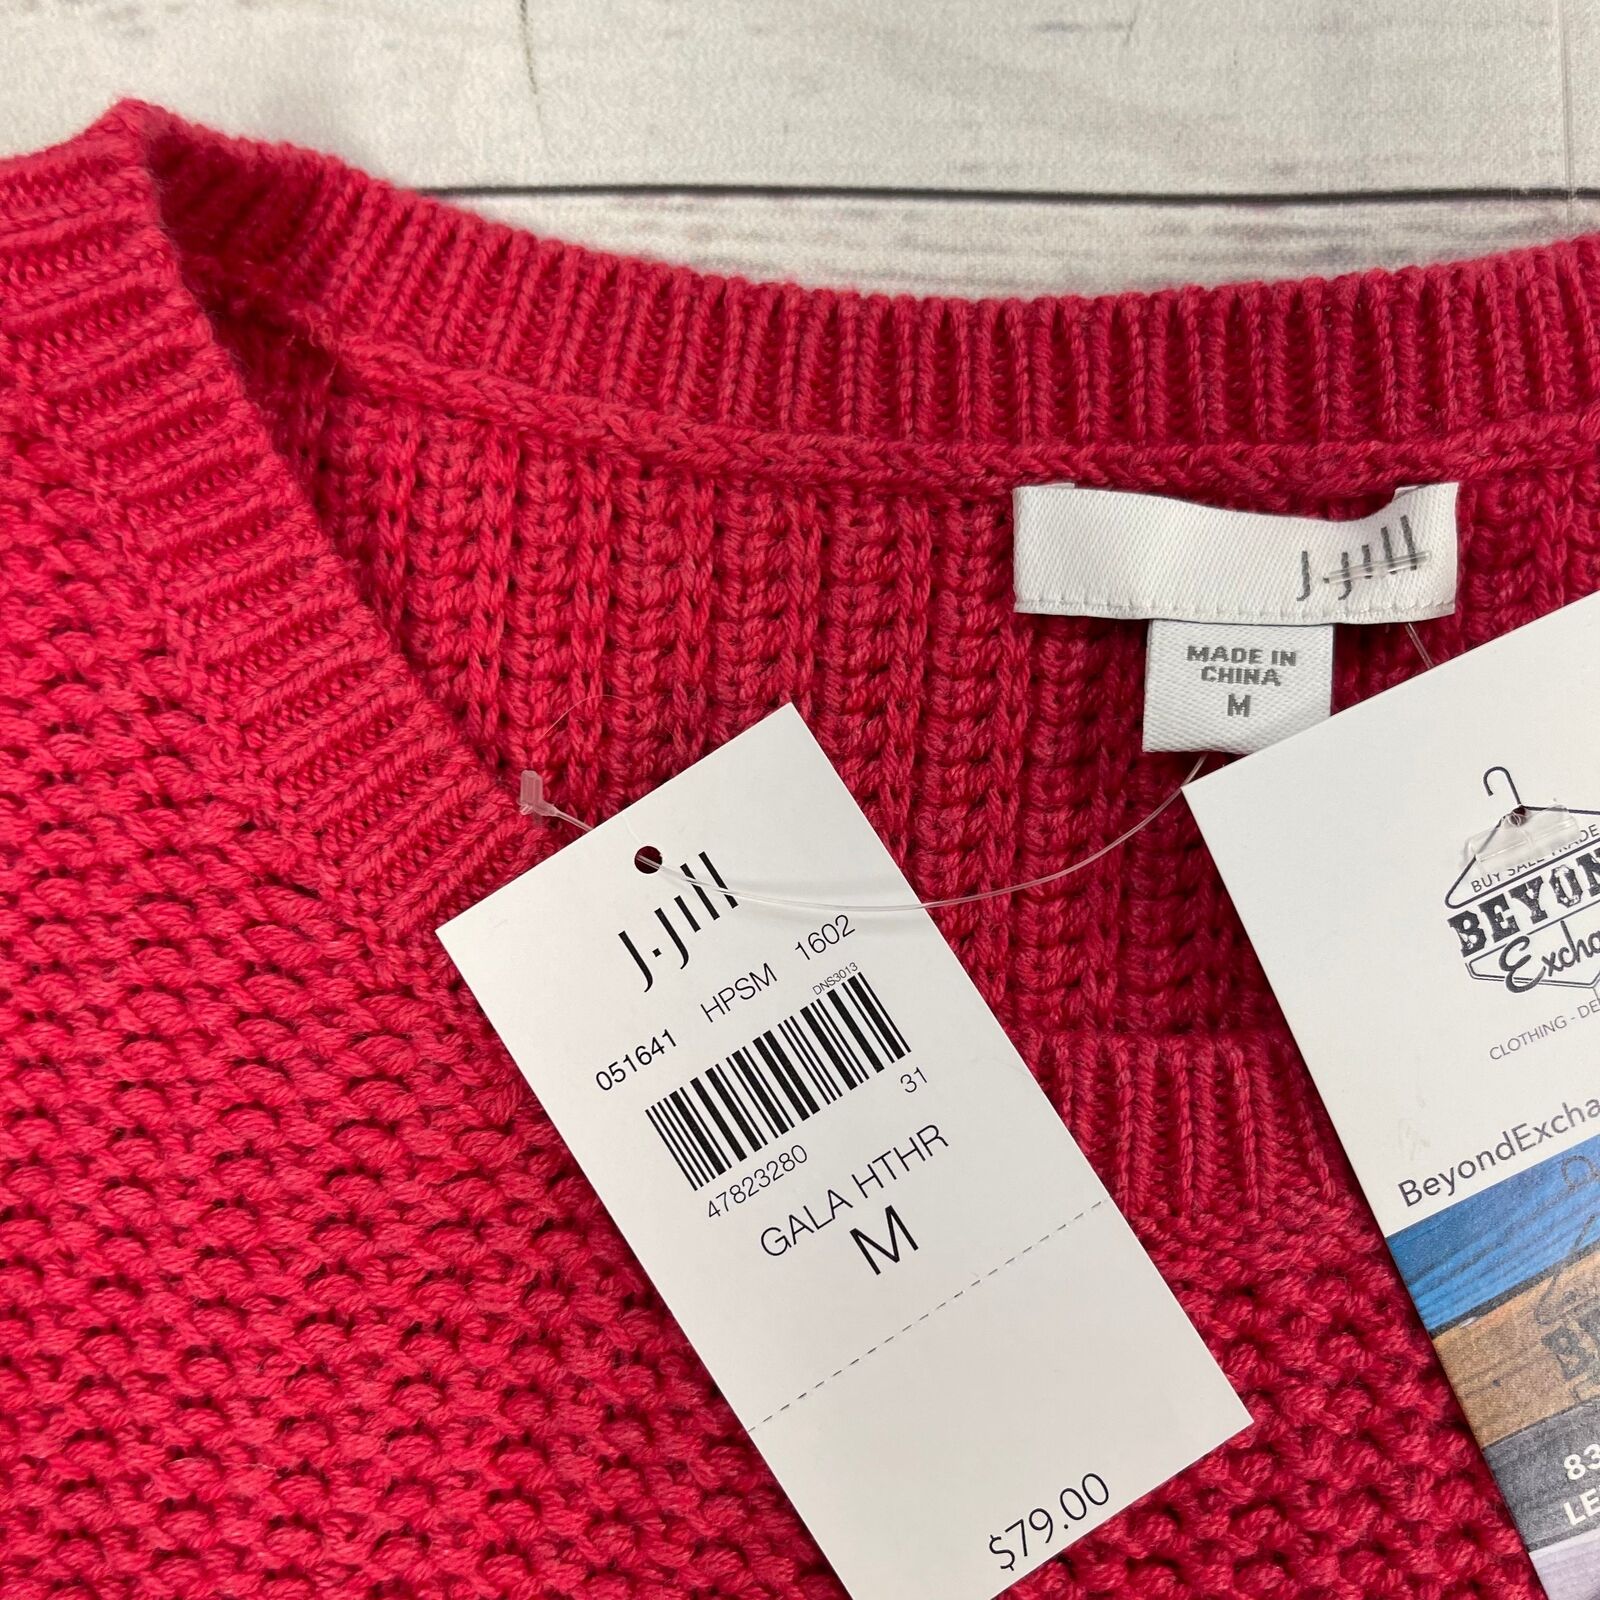 J Jill Sweatshirt Womens Large Red Pullover Round Neck Long Sleeve